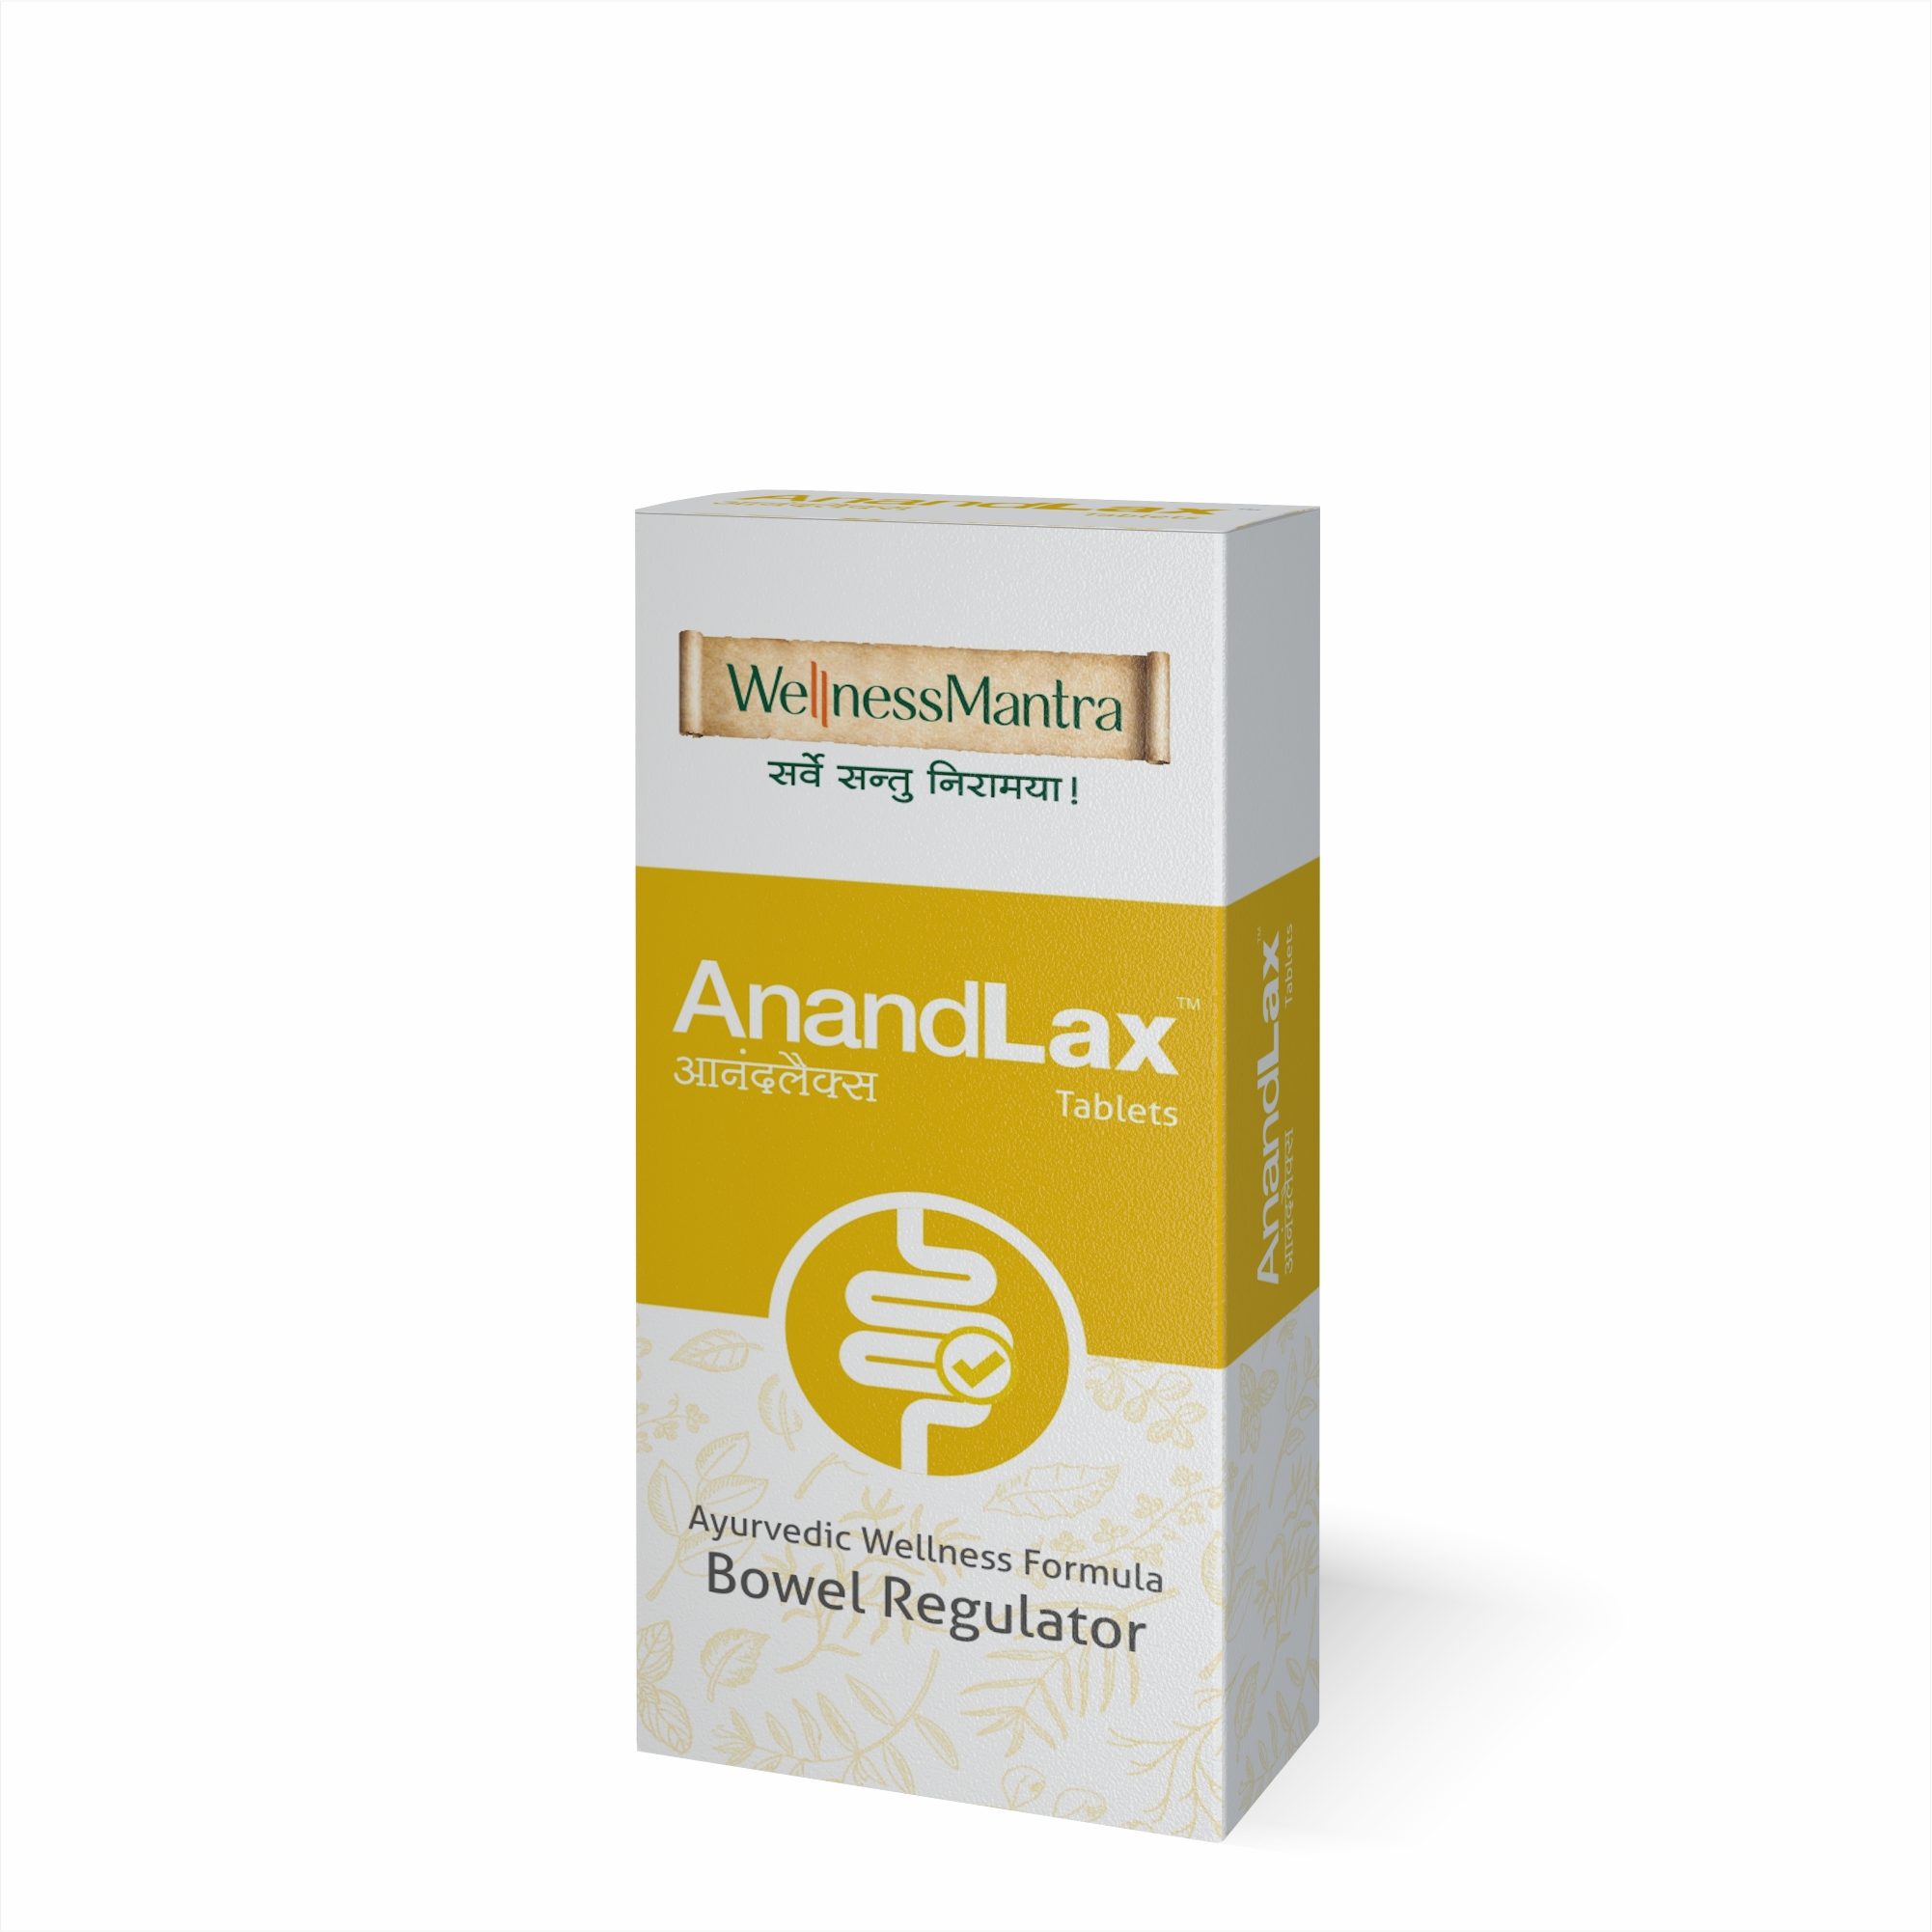 Wellness Mantra AnandLax Tablets